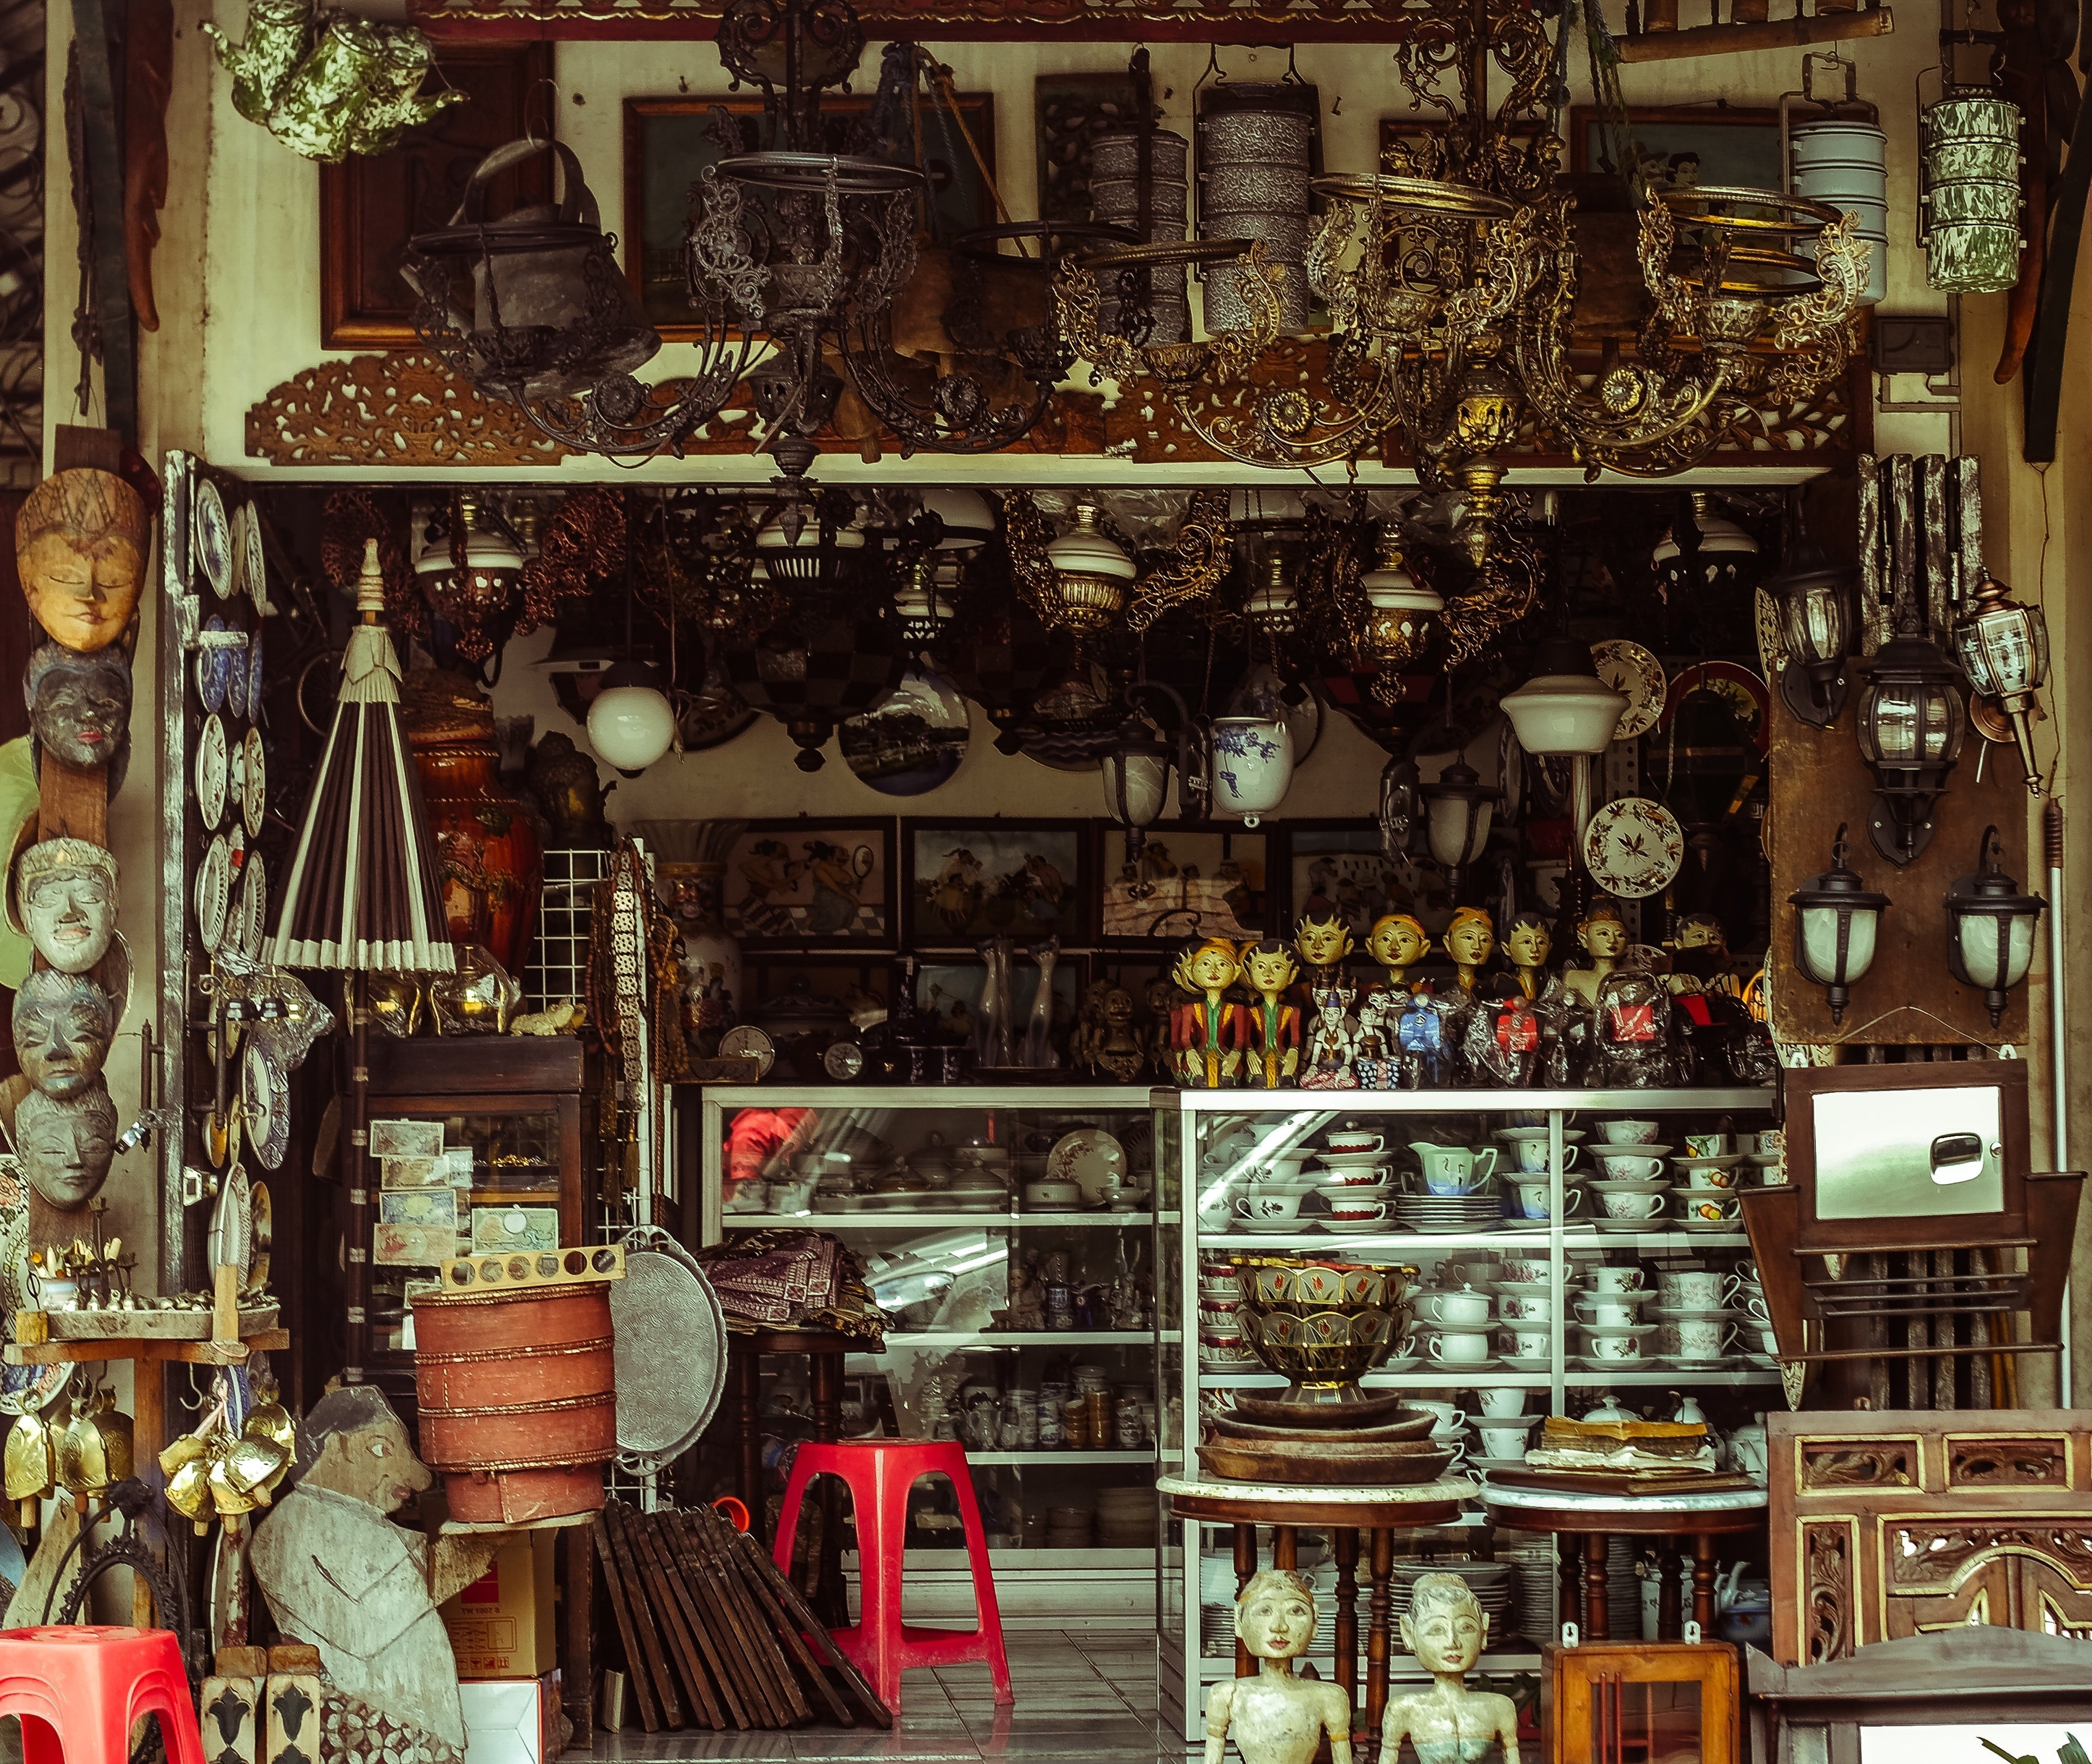 An antique shop display. | Source: Unsplash